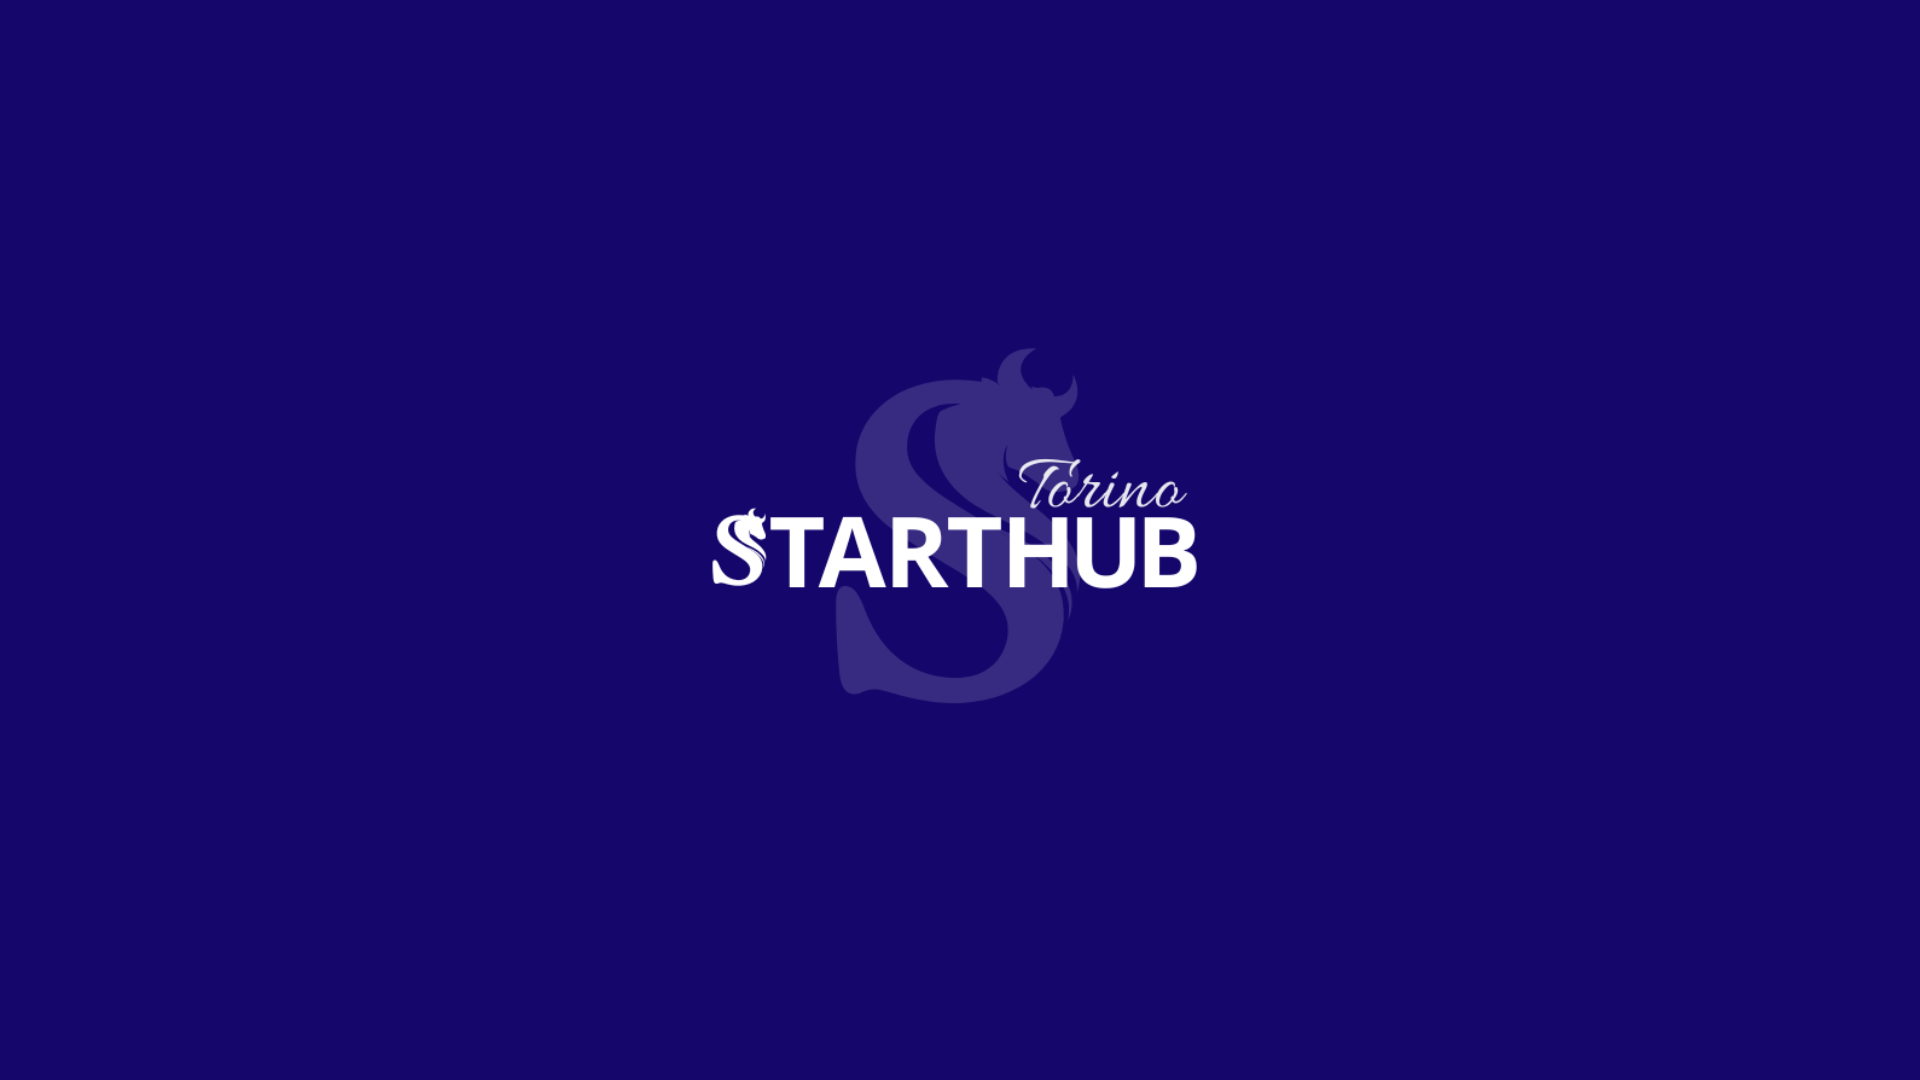 StartHub Torino